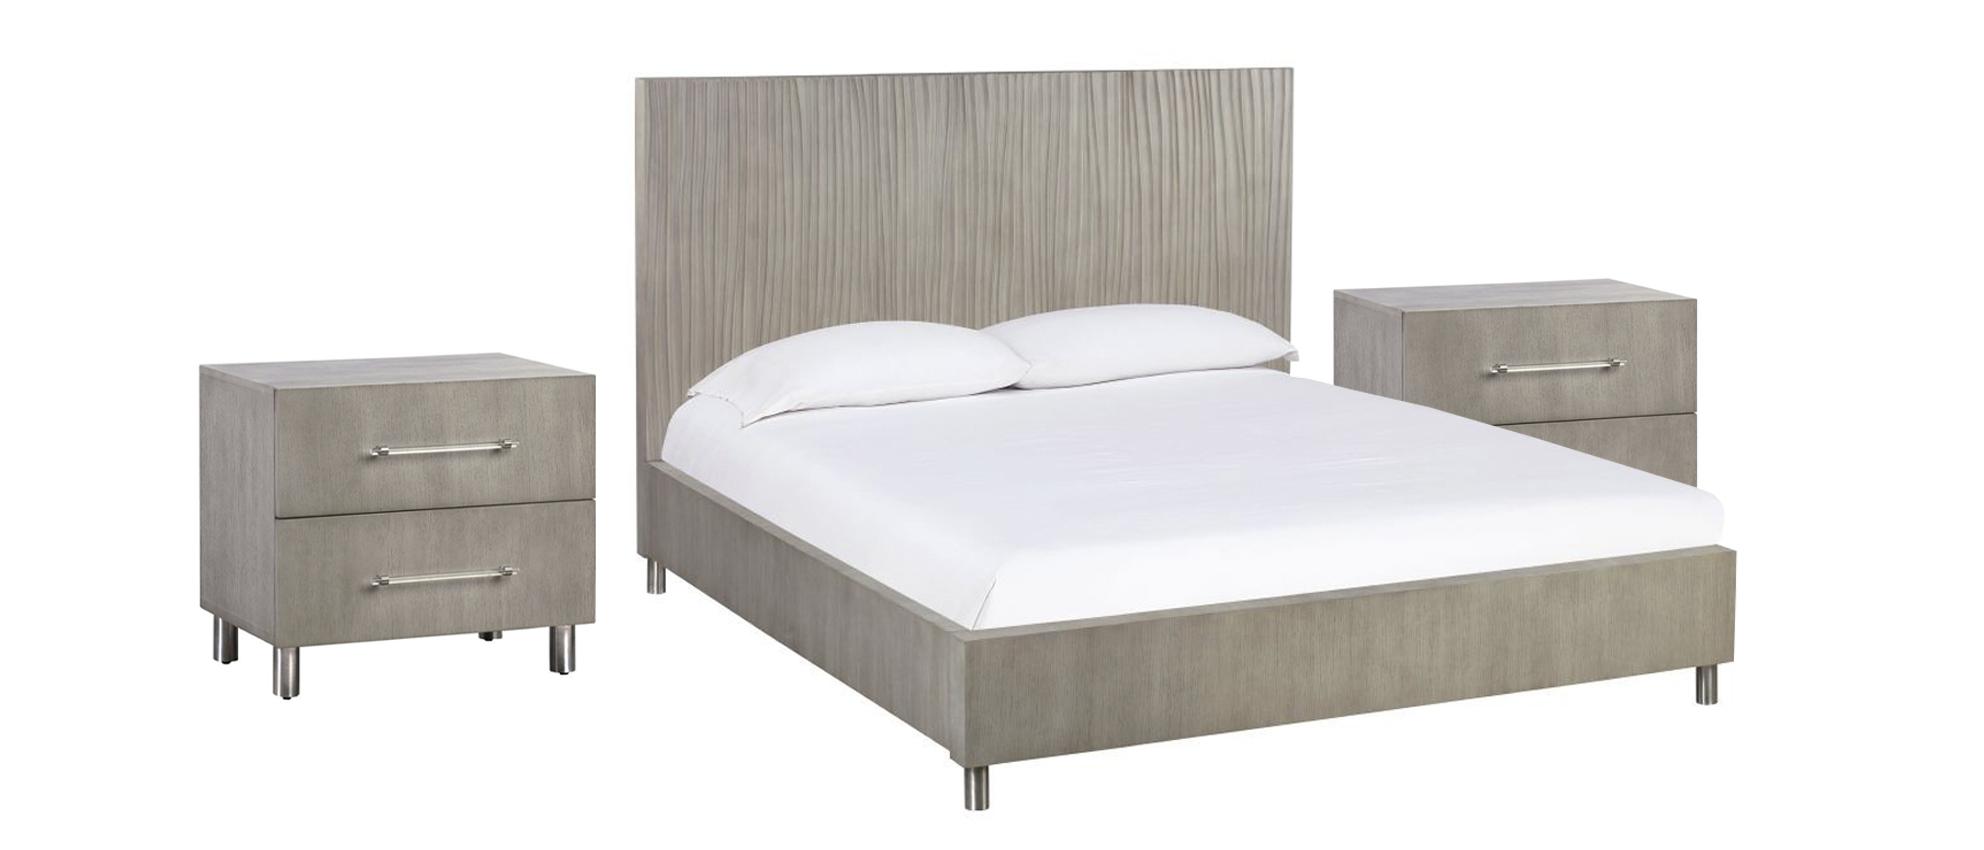 Contemporary Platform Bedroom Set ARGENTO 9DM8H5-2N-3PC in Gray 